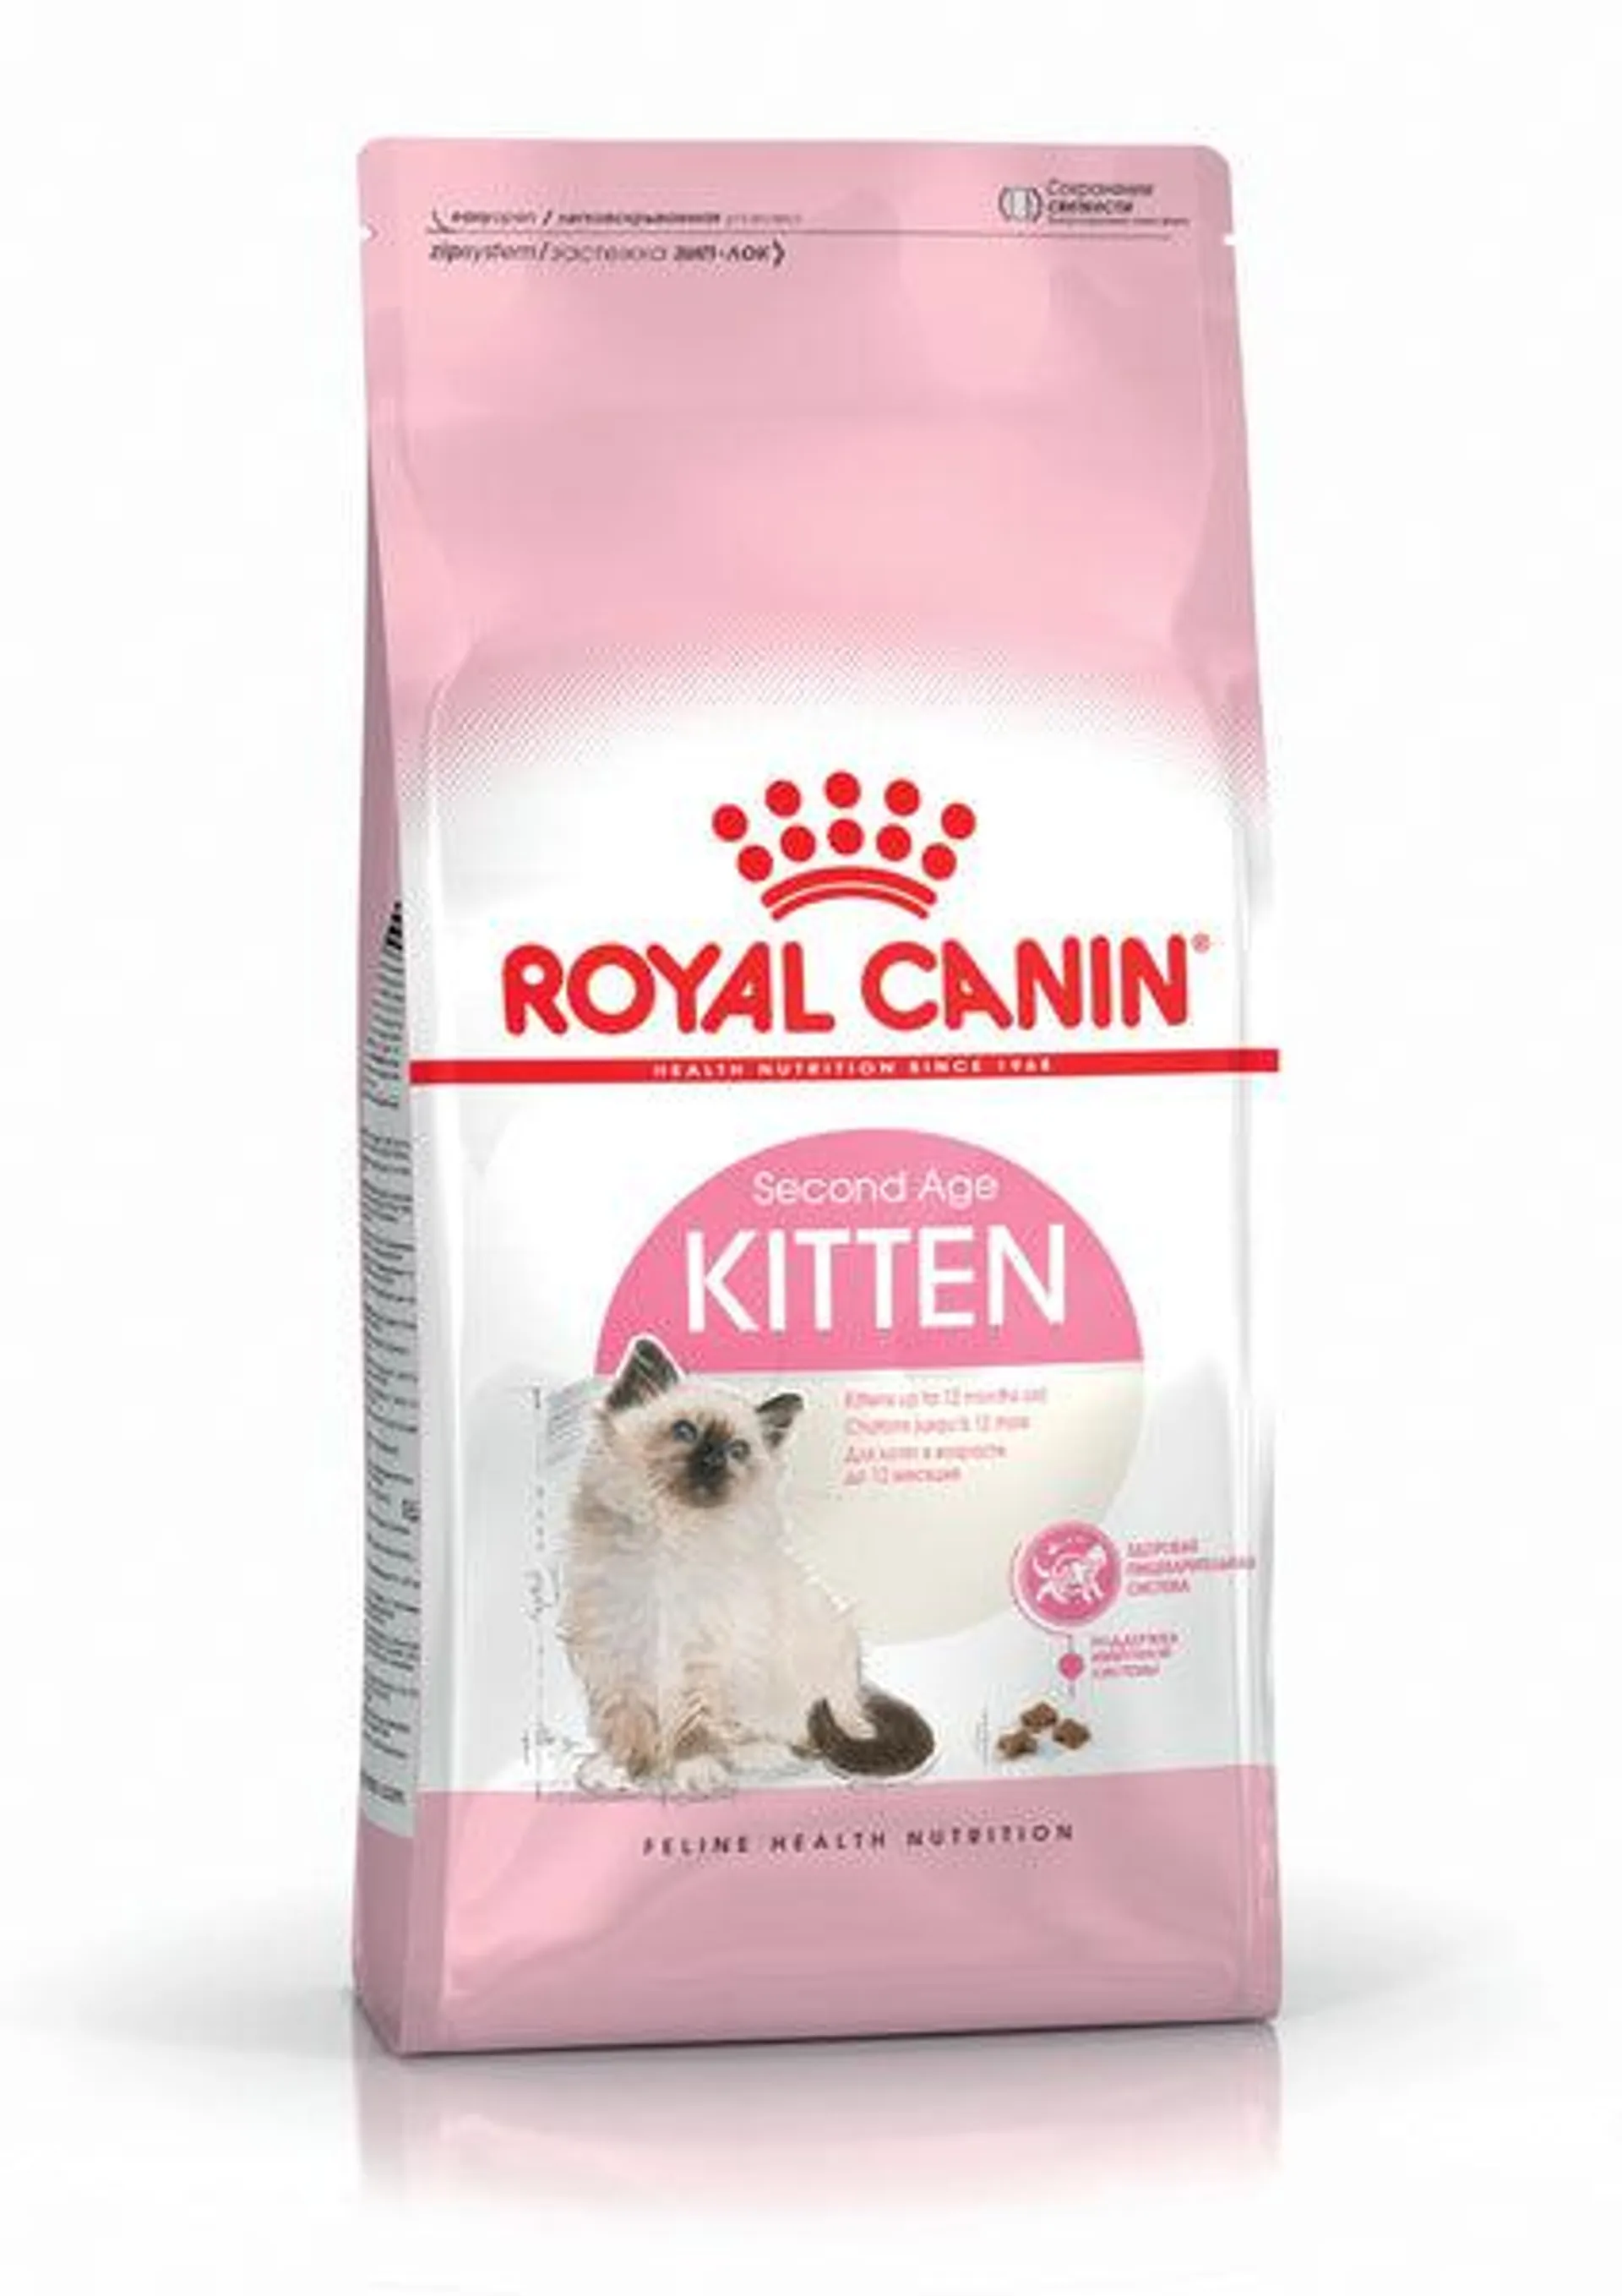 Royal Canin - Kitten Dry Food (4kg)